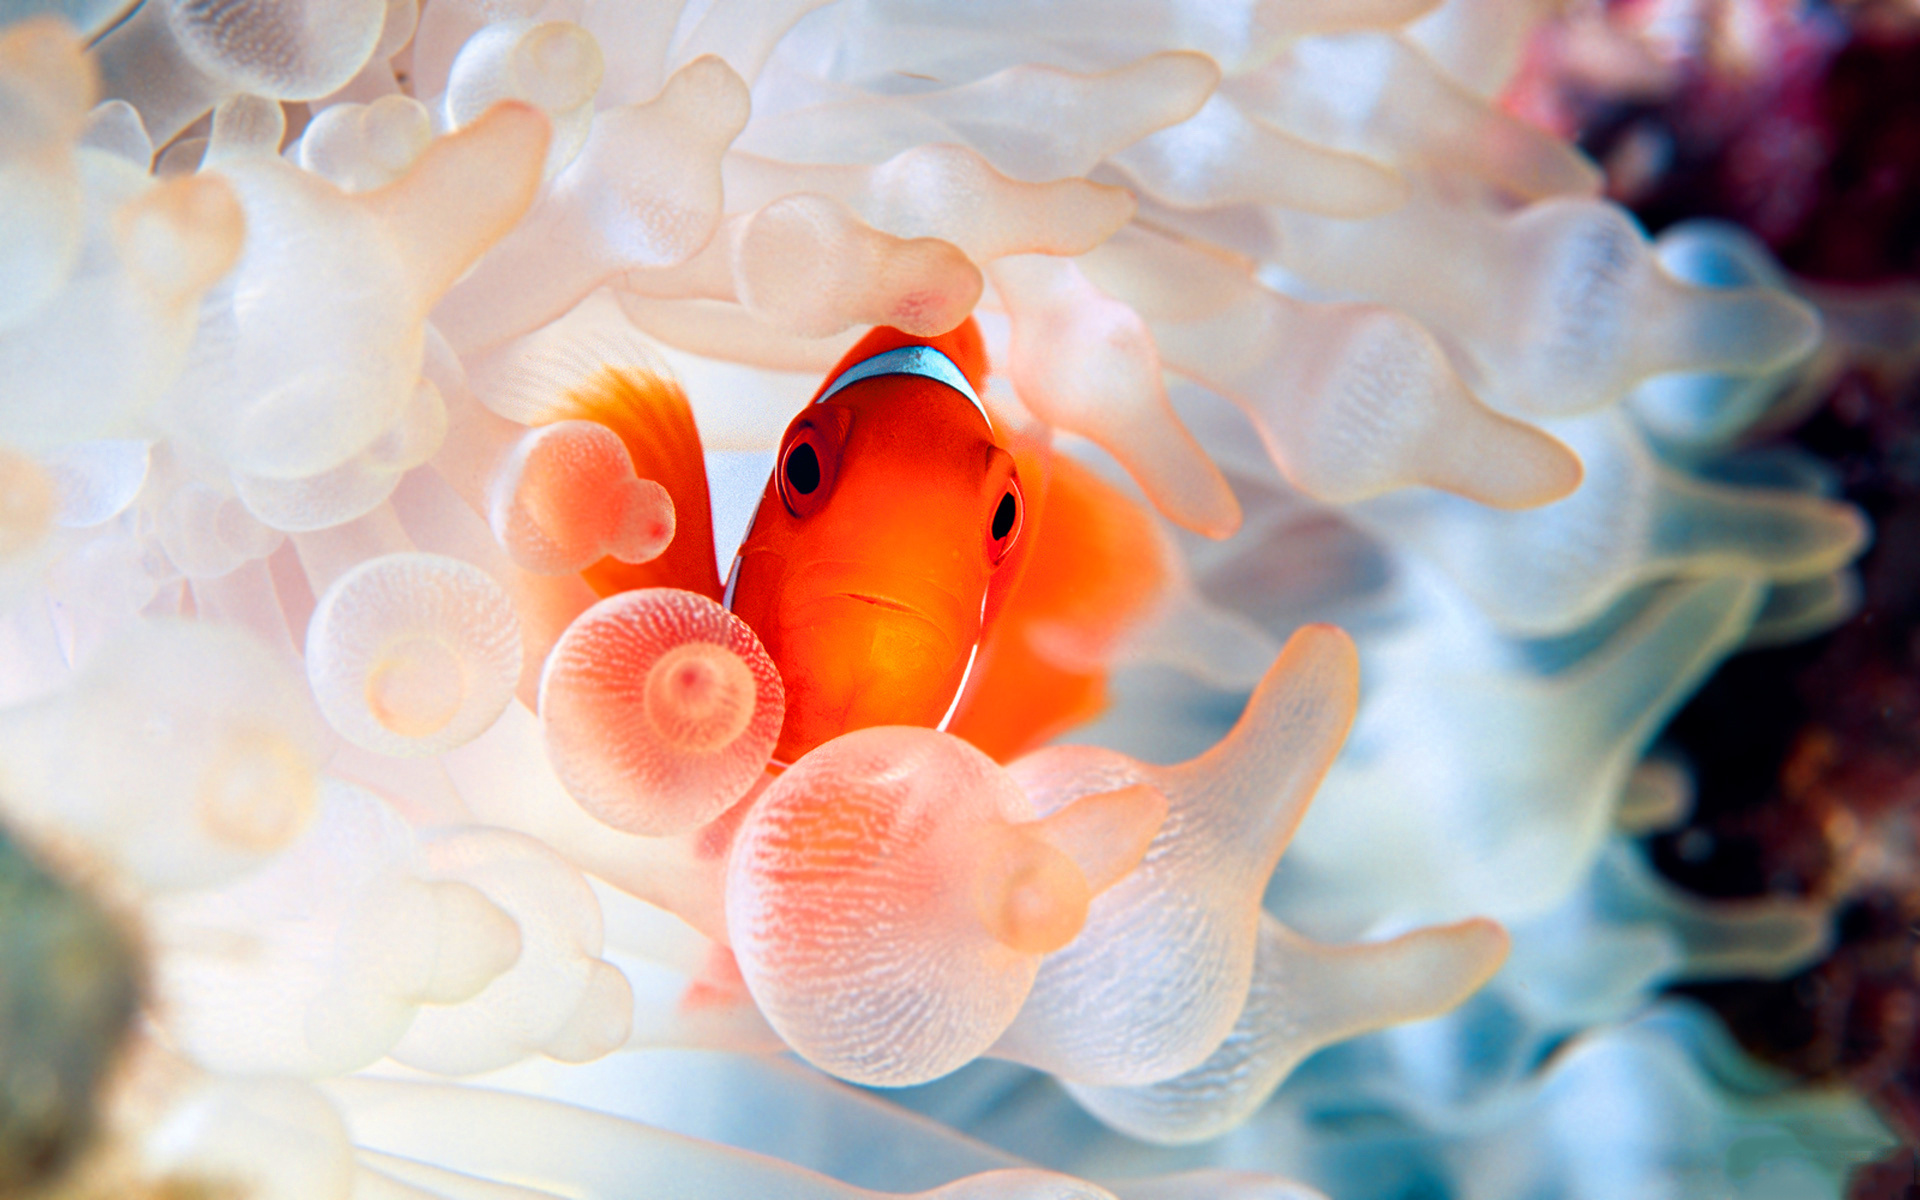 iPhone wallpaper, 4K clownfish beauty, Stunning underwater images, Colorful marine life, 1920x1200 HD Desktop